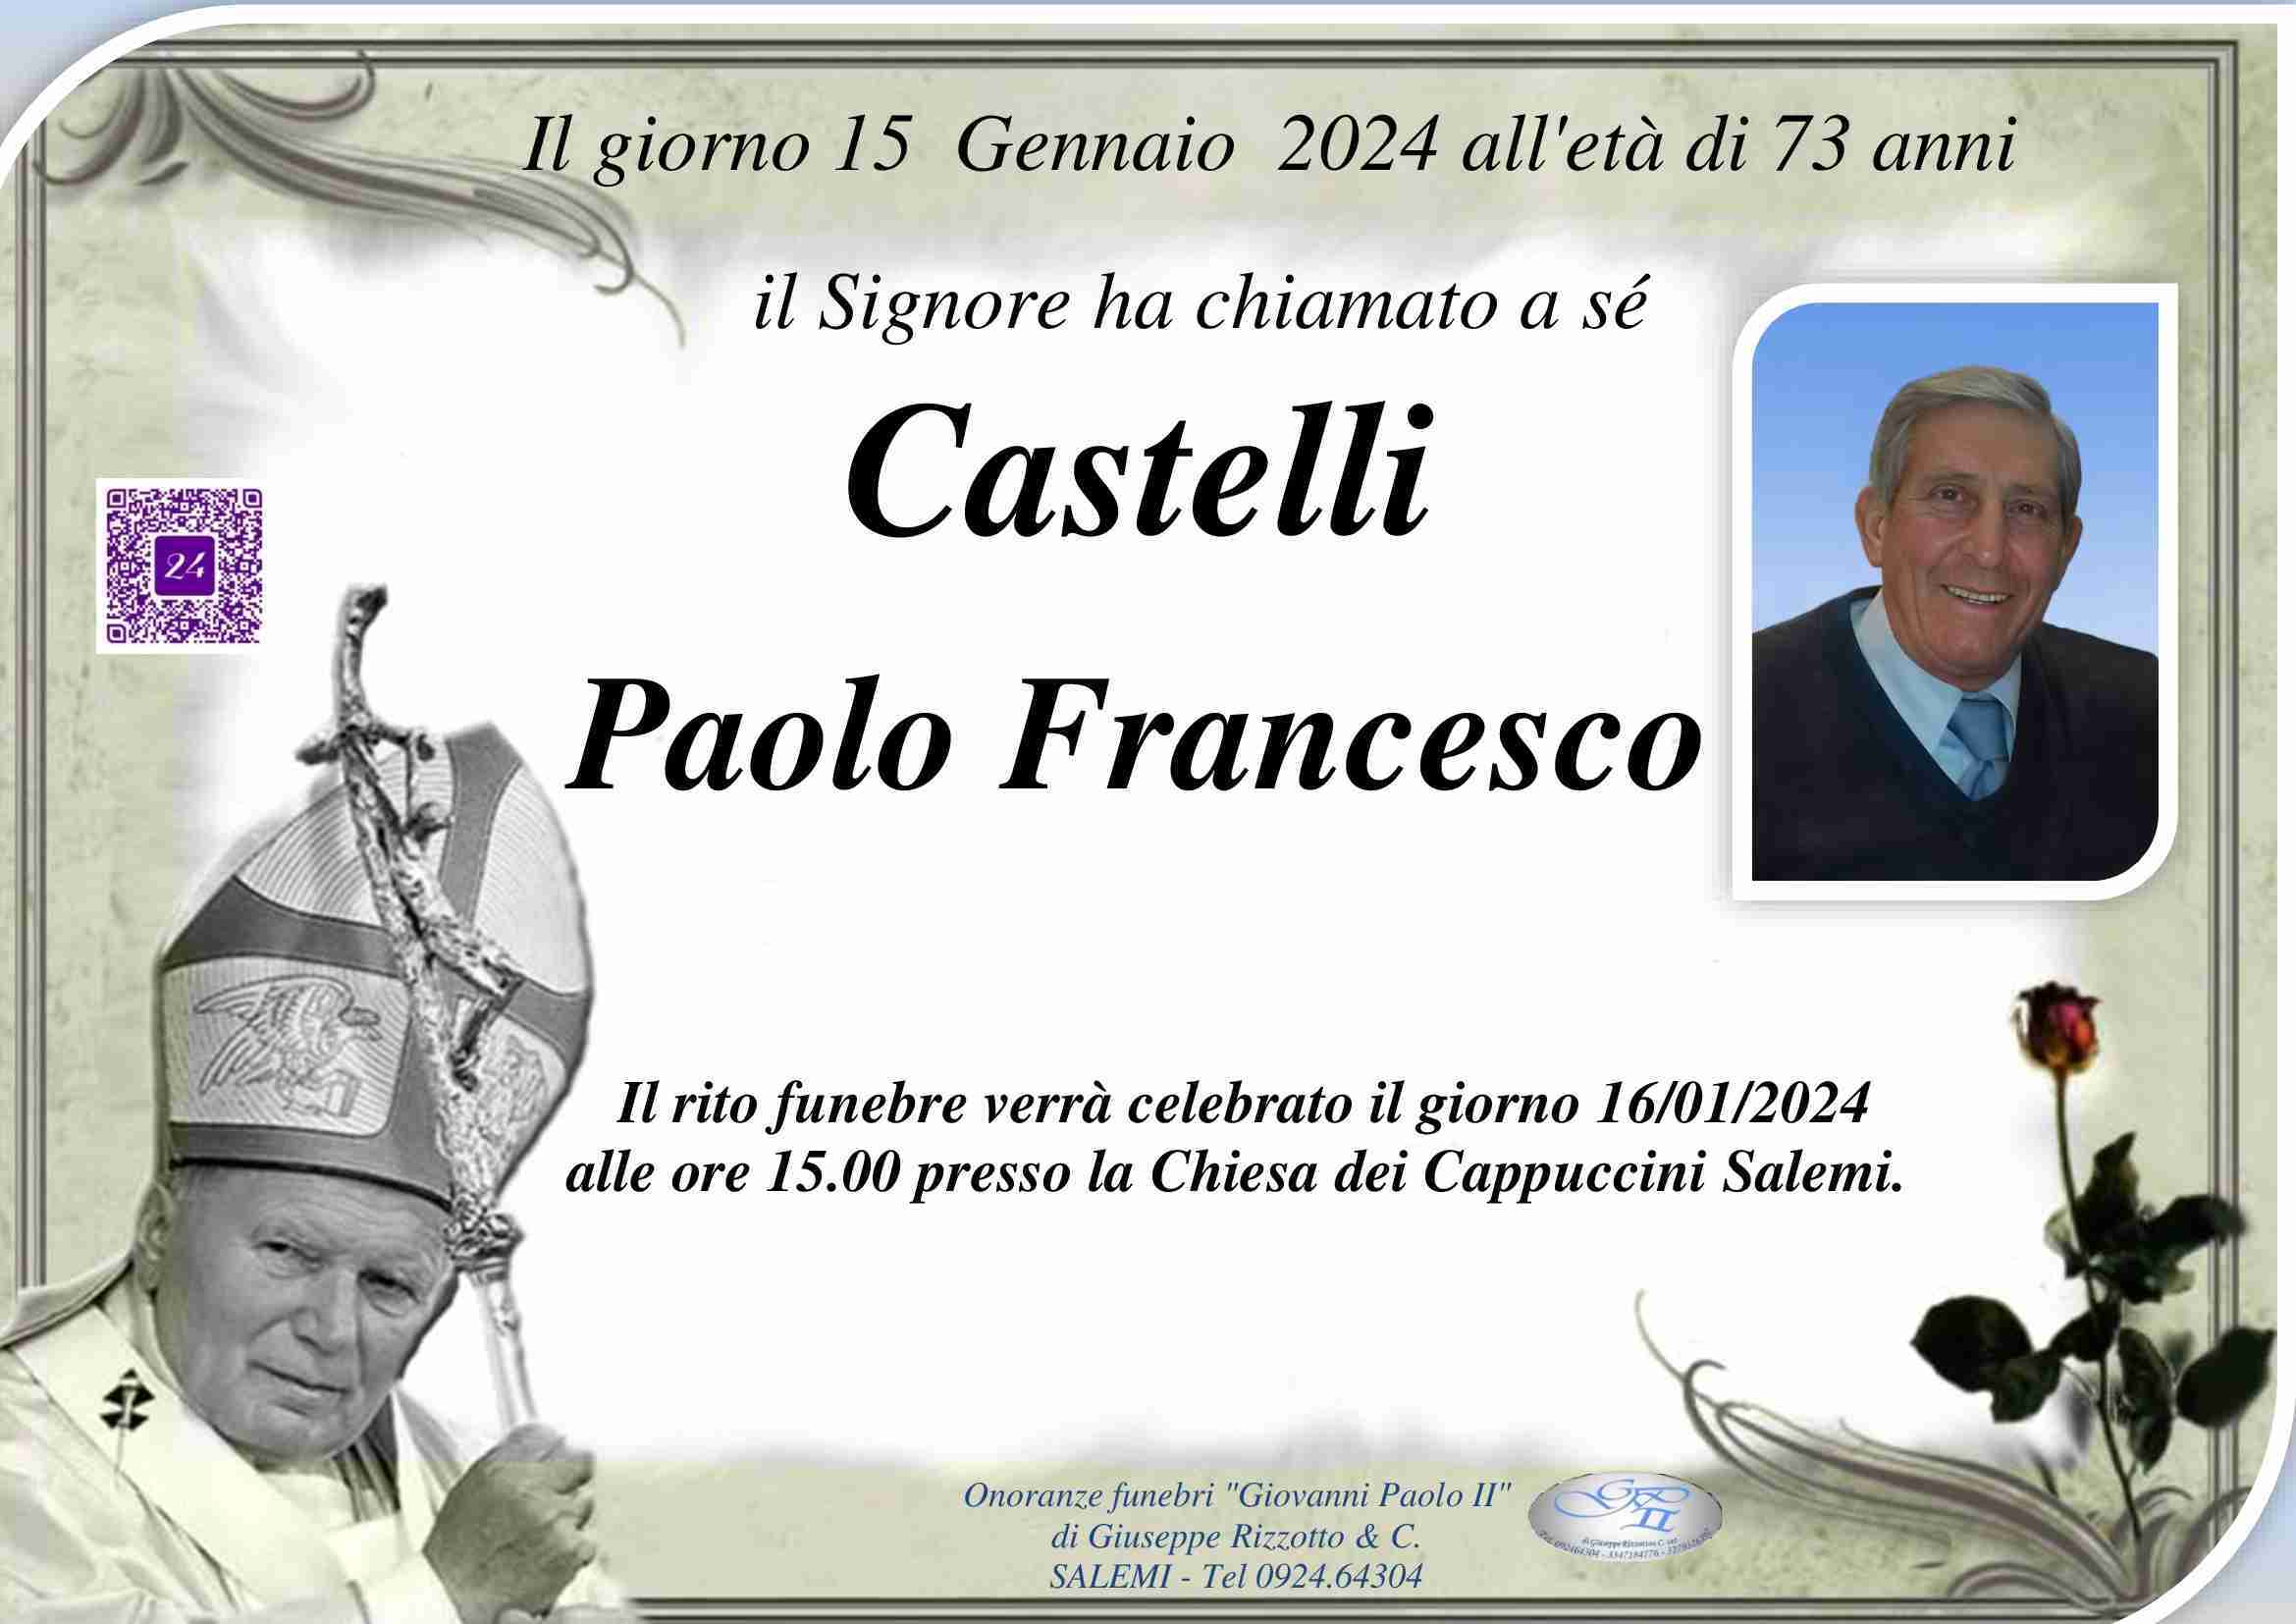 Paolo Francesco Castelli